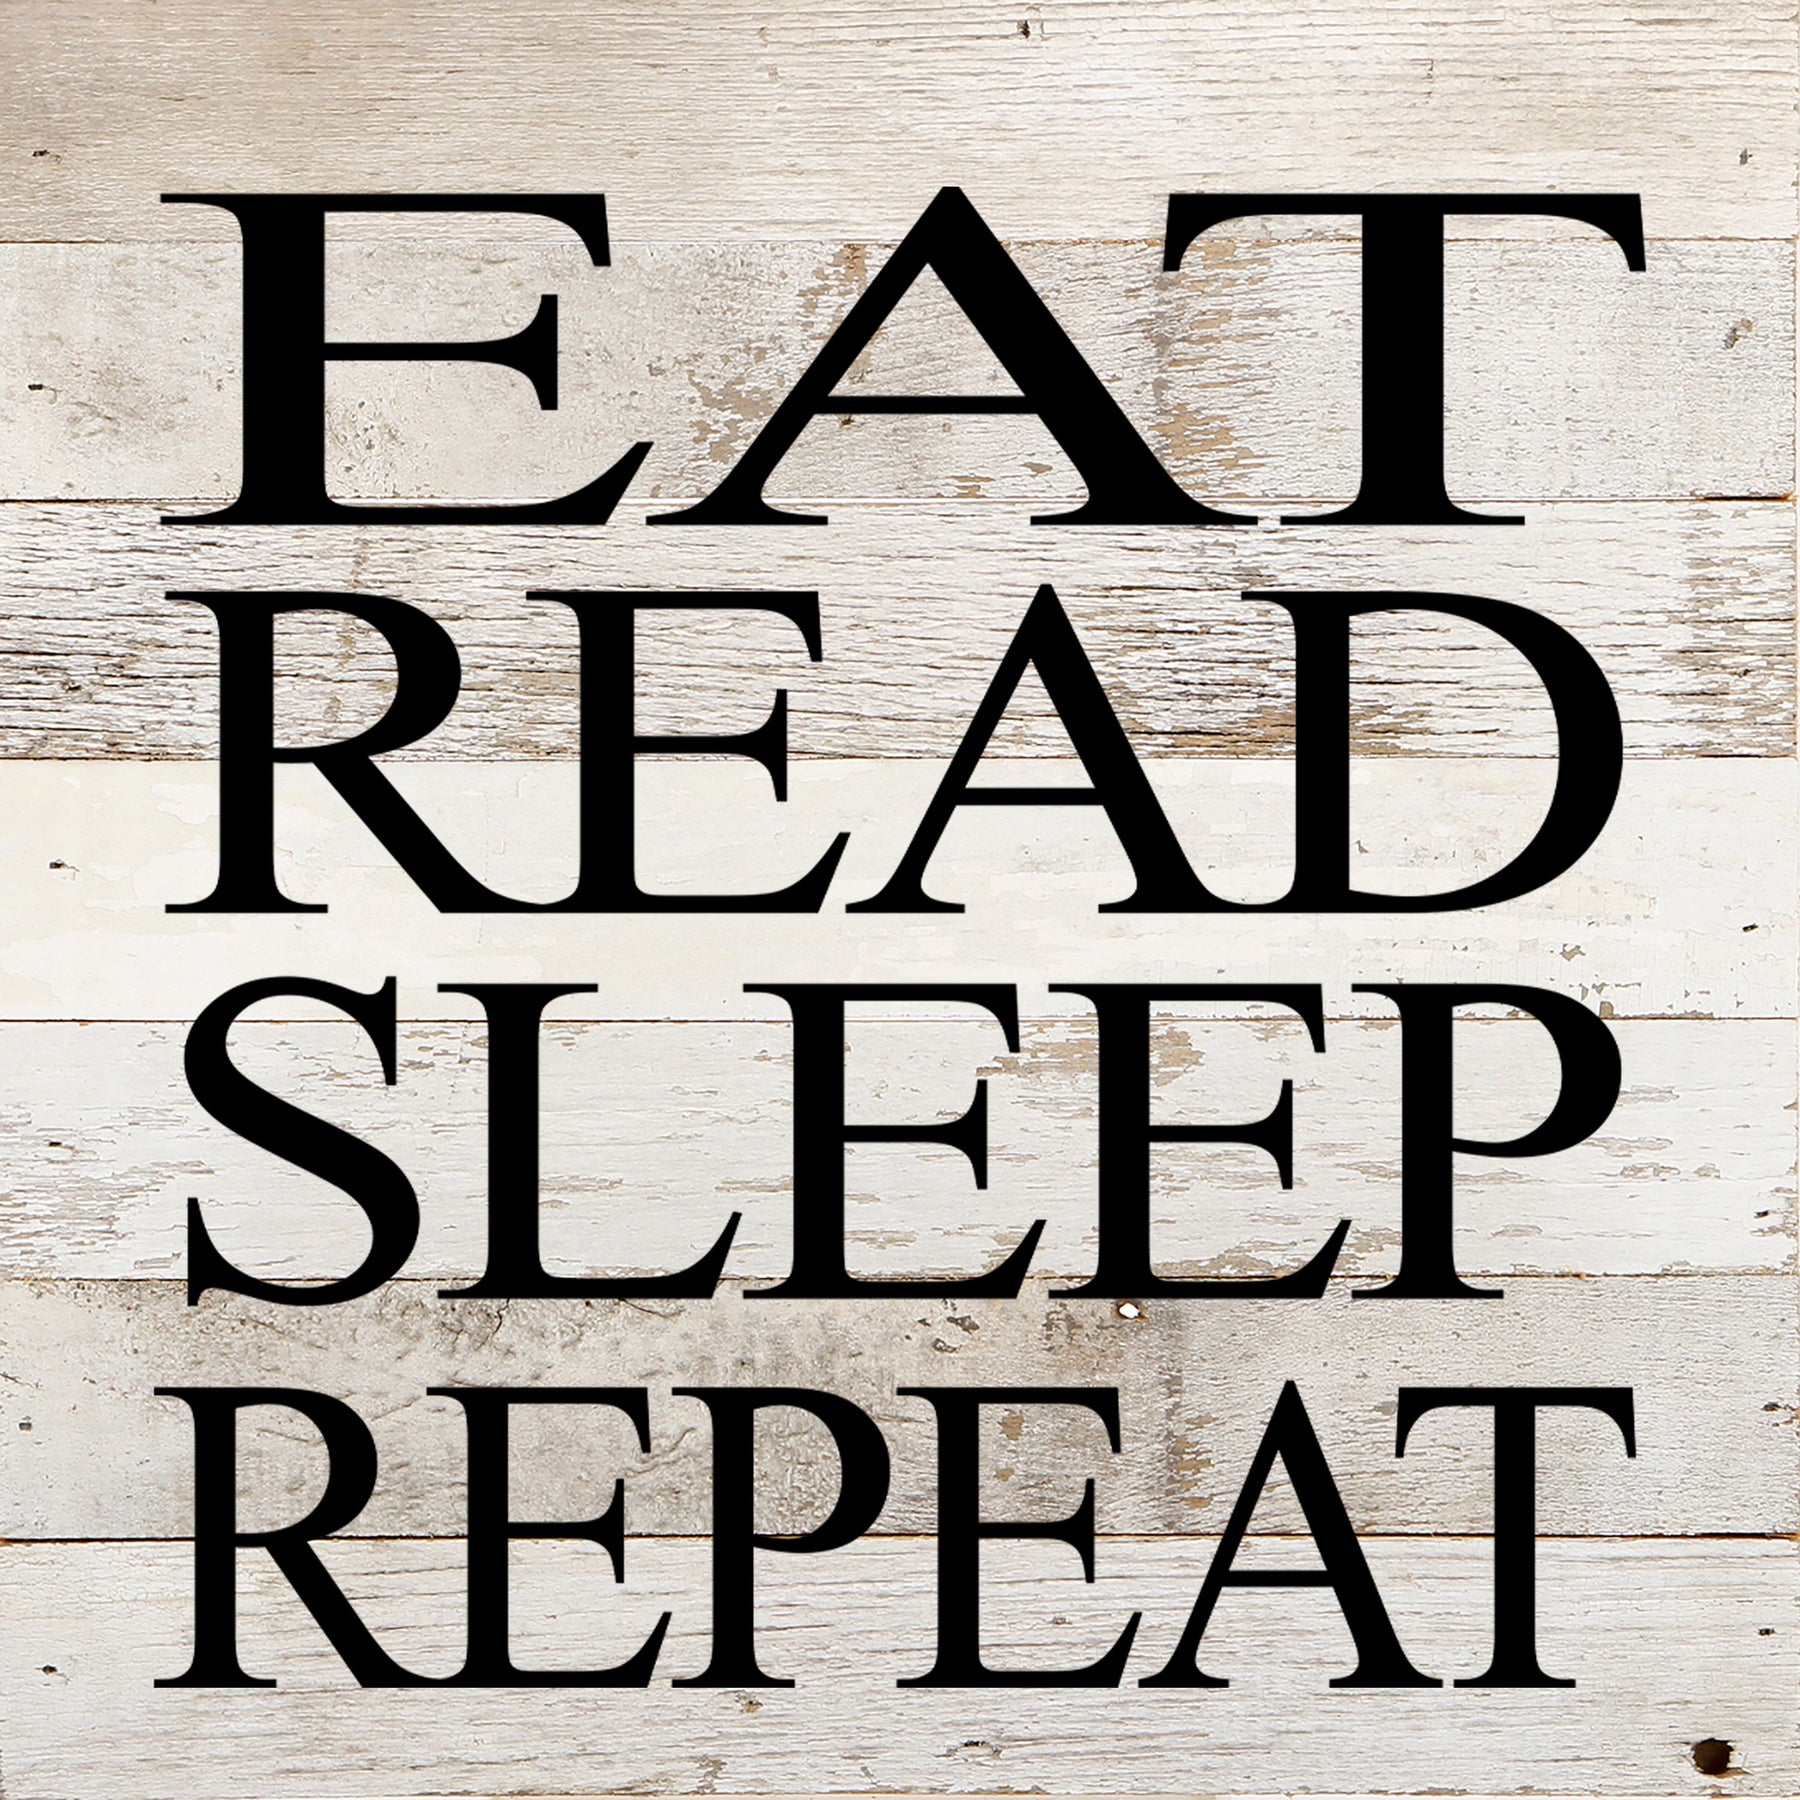 Eat, read, sleep, repeat. / 10"x10" Reclaimed Wood Sign